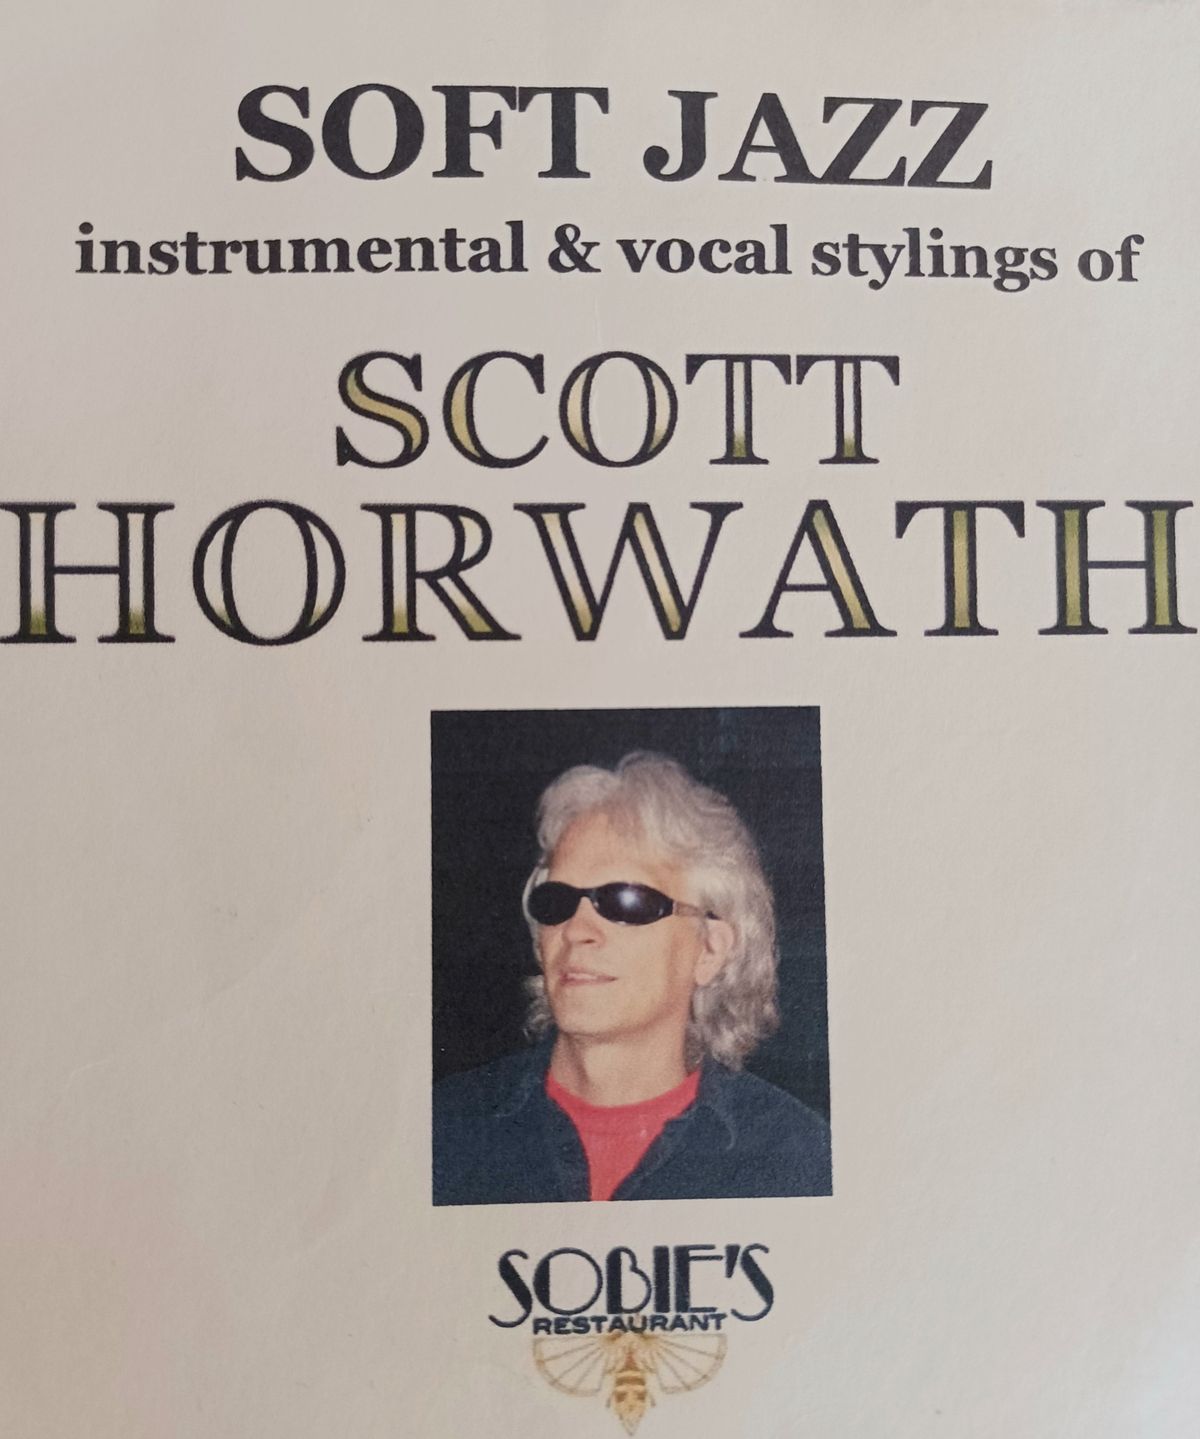 Spring Concert Series - Scott Horwath & Alycia Betz